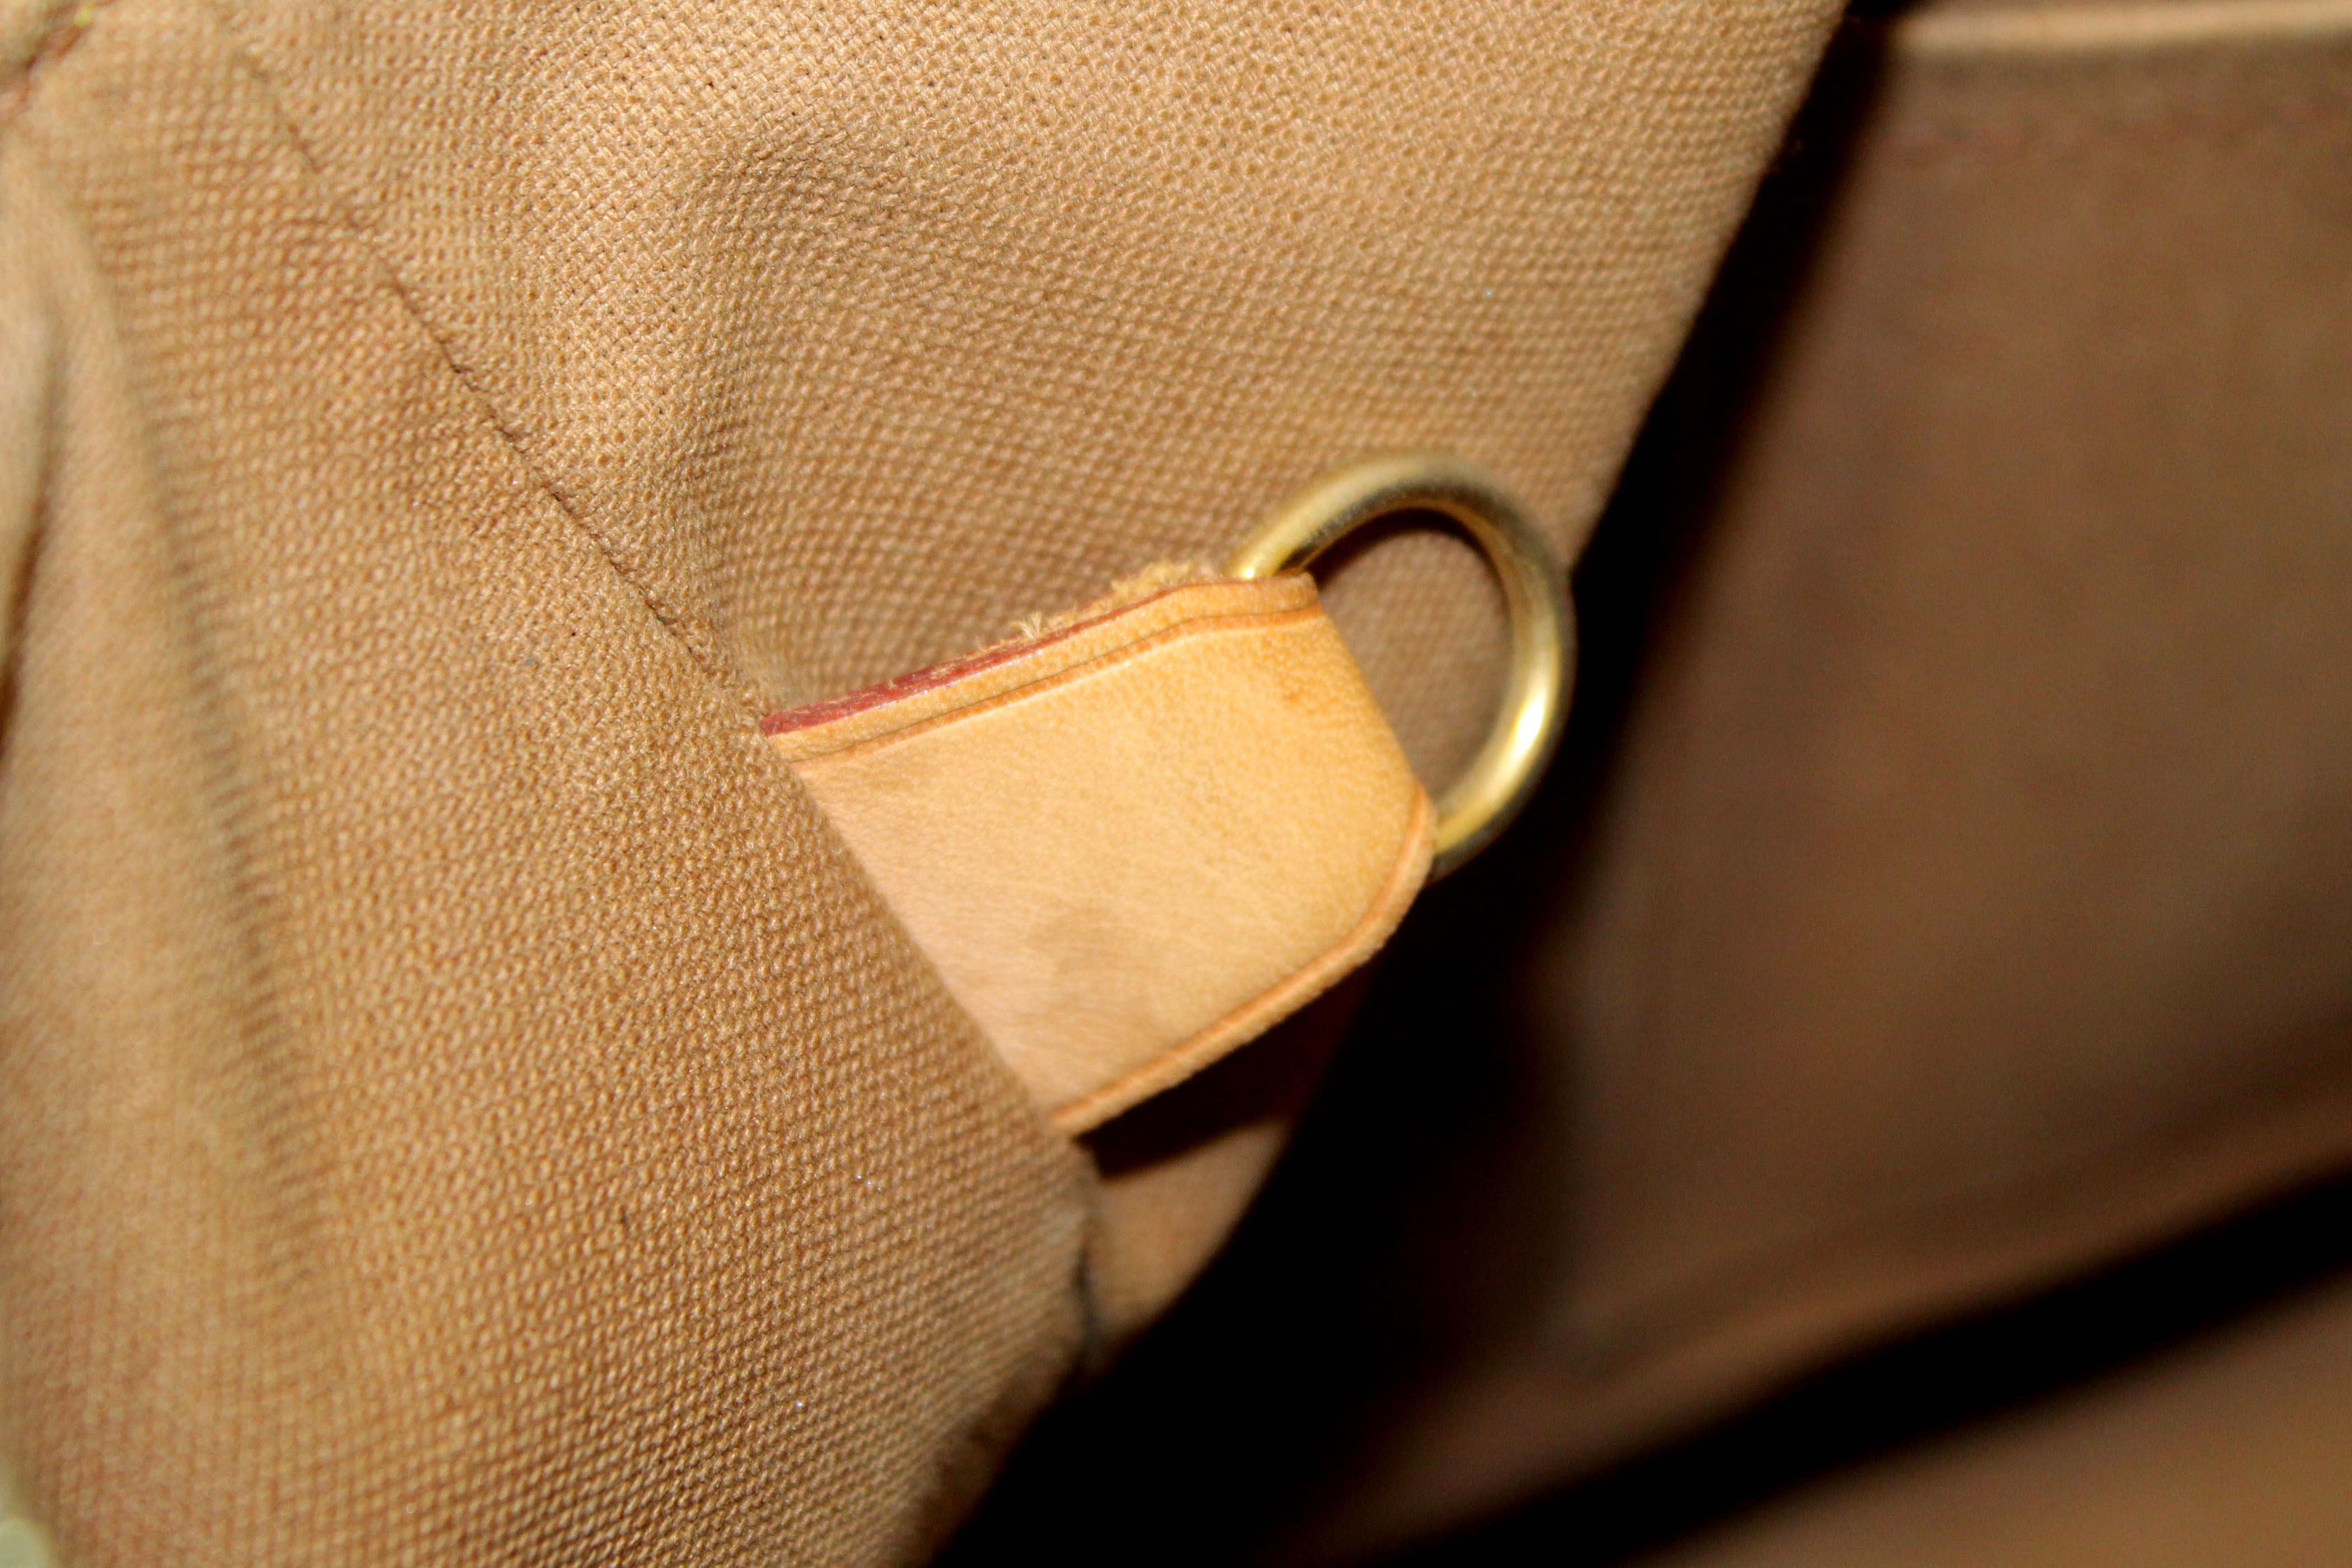 Authentic Louis Vuitton Monogram Totally MM Shoulder Tote Bag